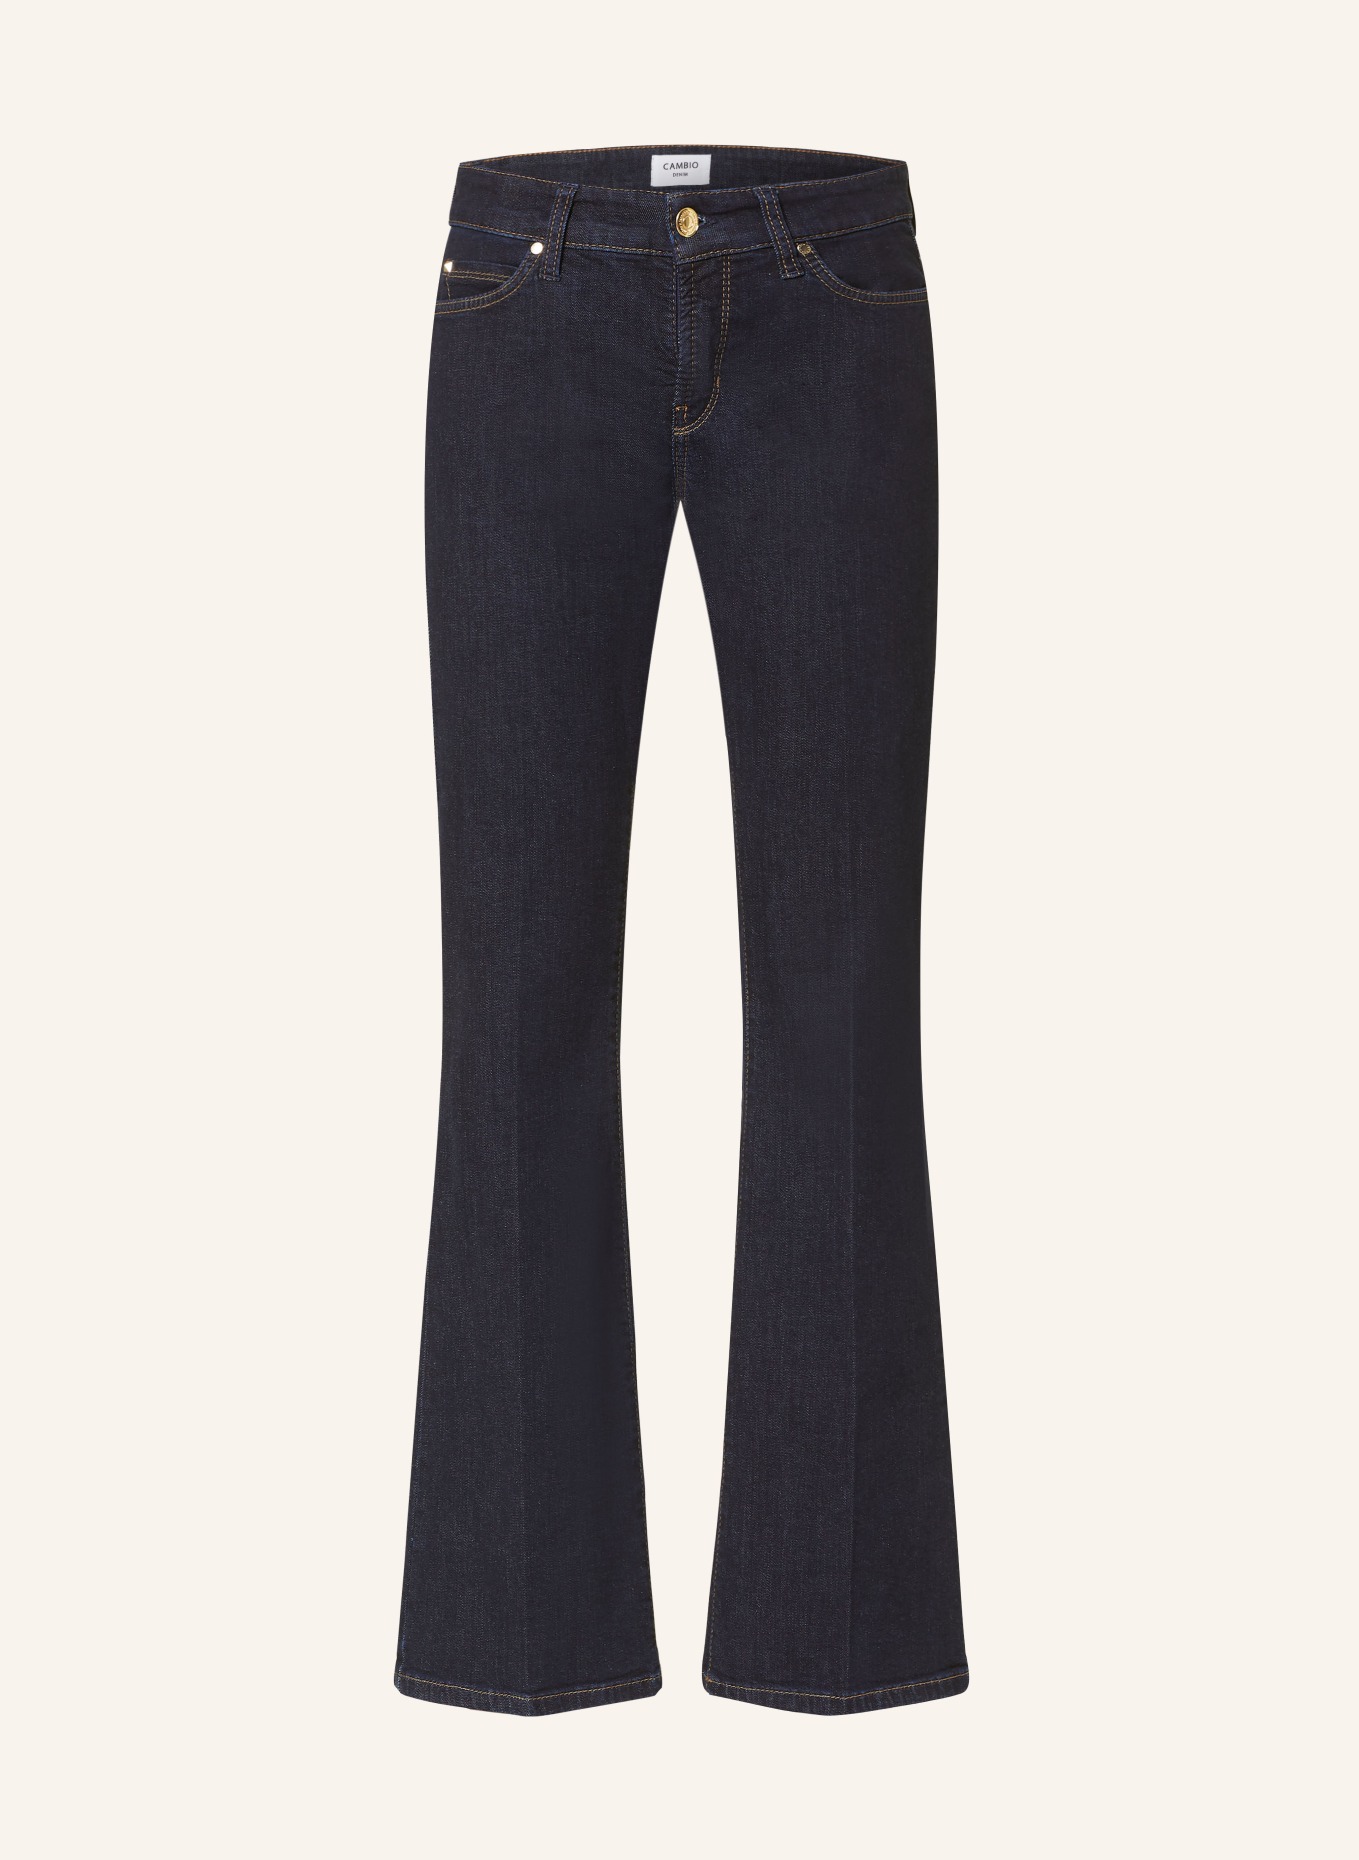 CAMBIO Flared Jeans PARIS, Farbe: 5006 modern rinsed (Bild 1)